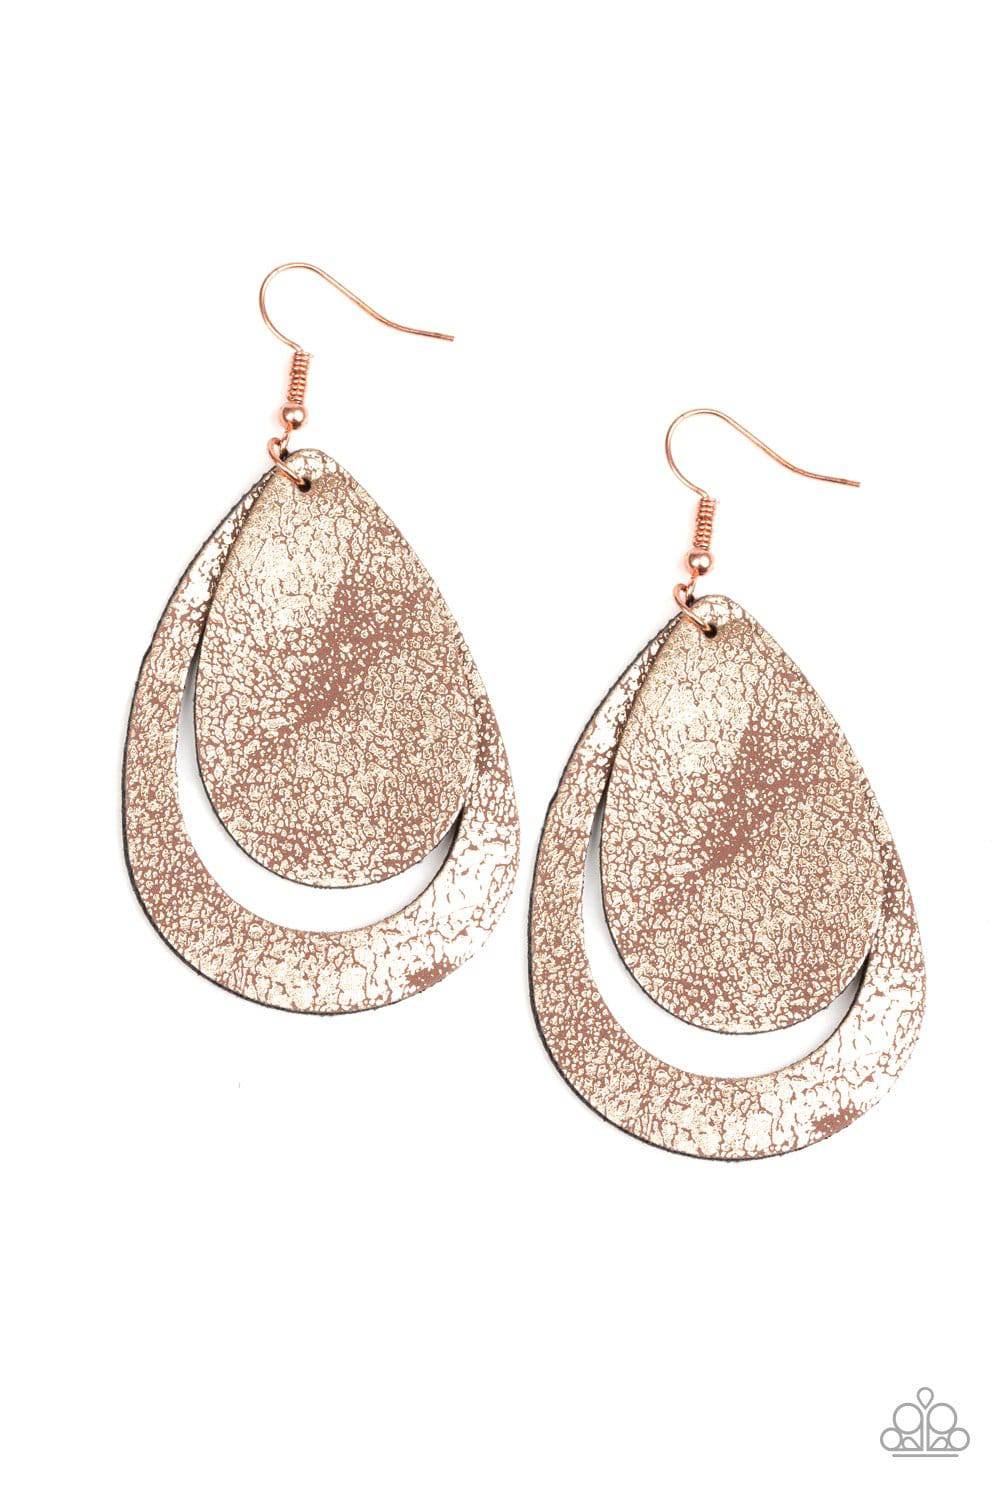 Fiery Firework - Metallic Copper Leather Earrings - Paparazzi Accessories - GlaMarous Titi Jewels